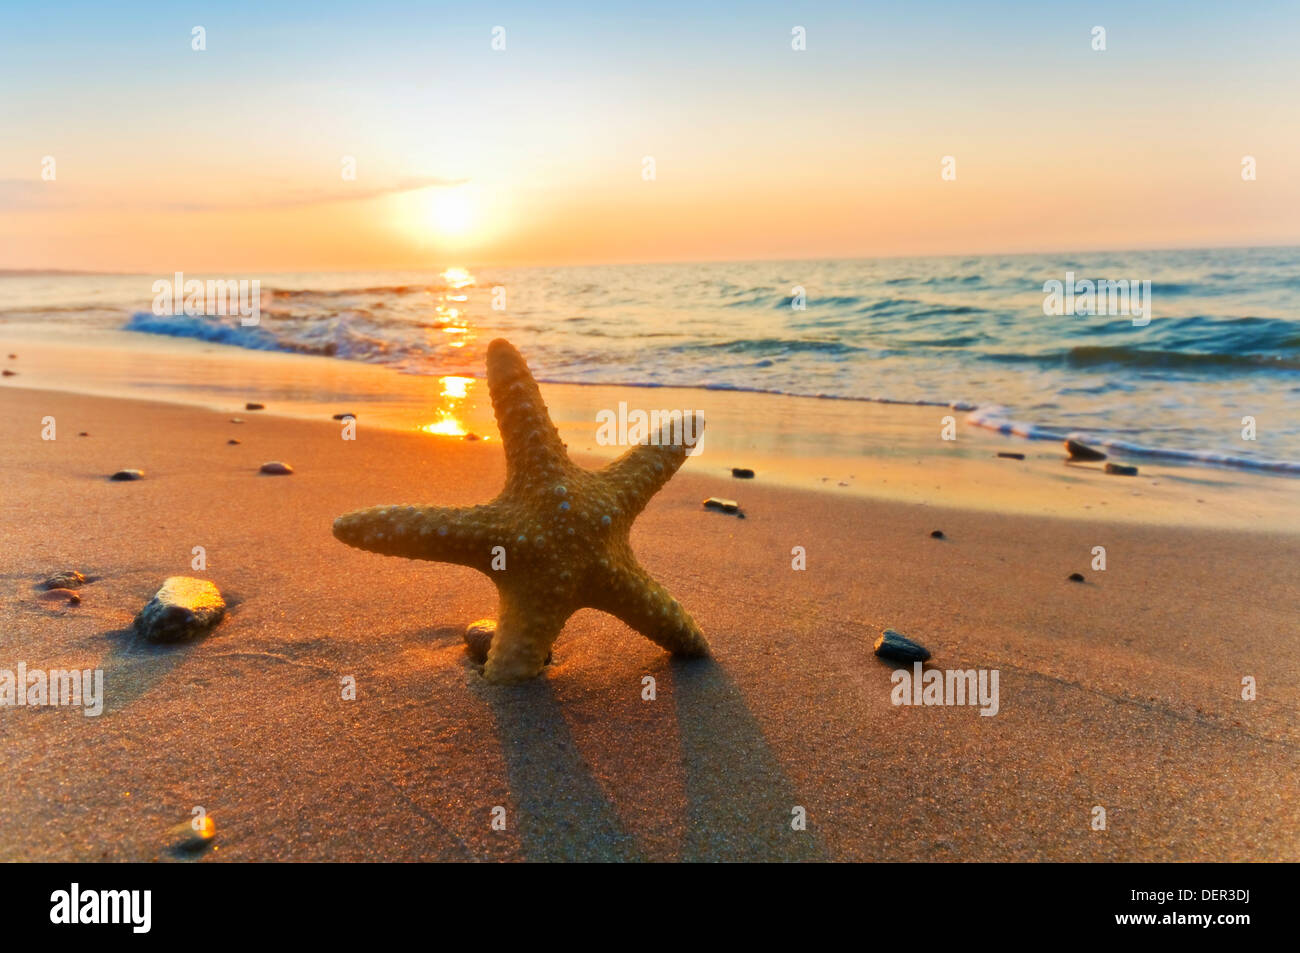 Starfish on a beach at sunset Stock Photo